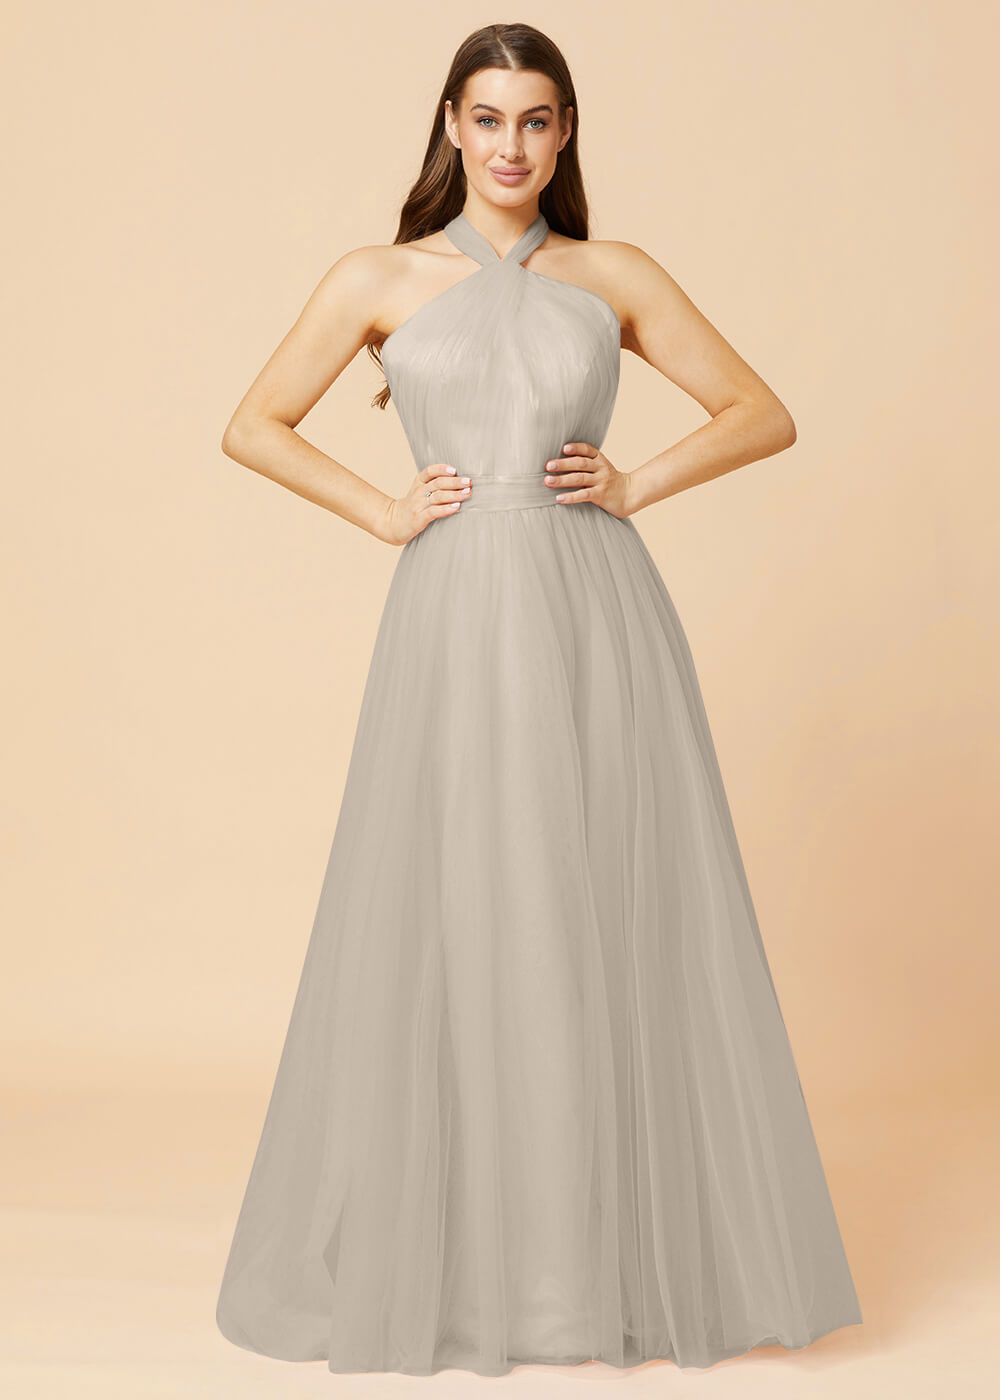 Halter Neck A-line Tulle Bridesmaid Dress